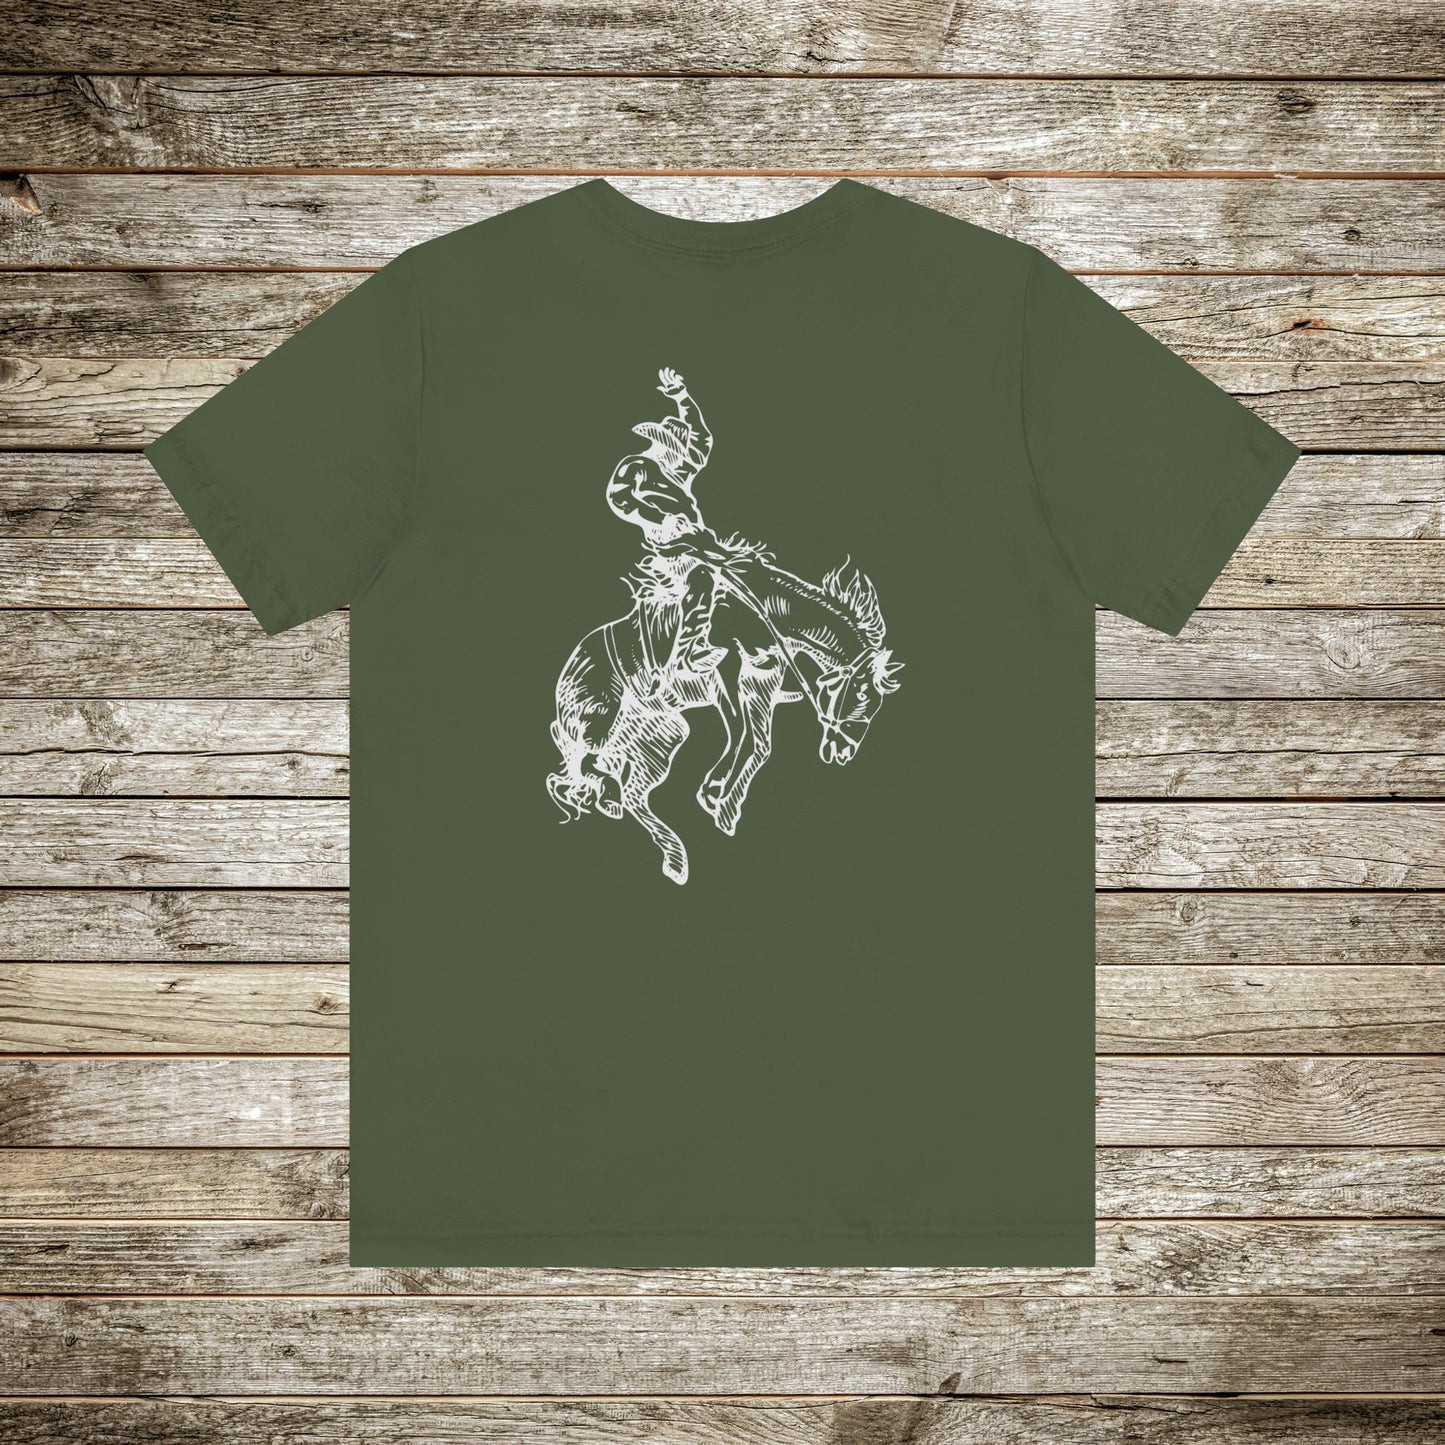 Rodeo Cowboy T-shirt Rodeo Bucking Bronc Horse Riders - FlooredByArt